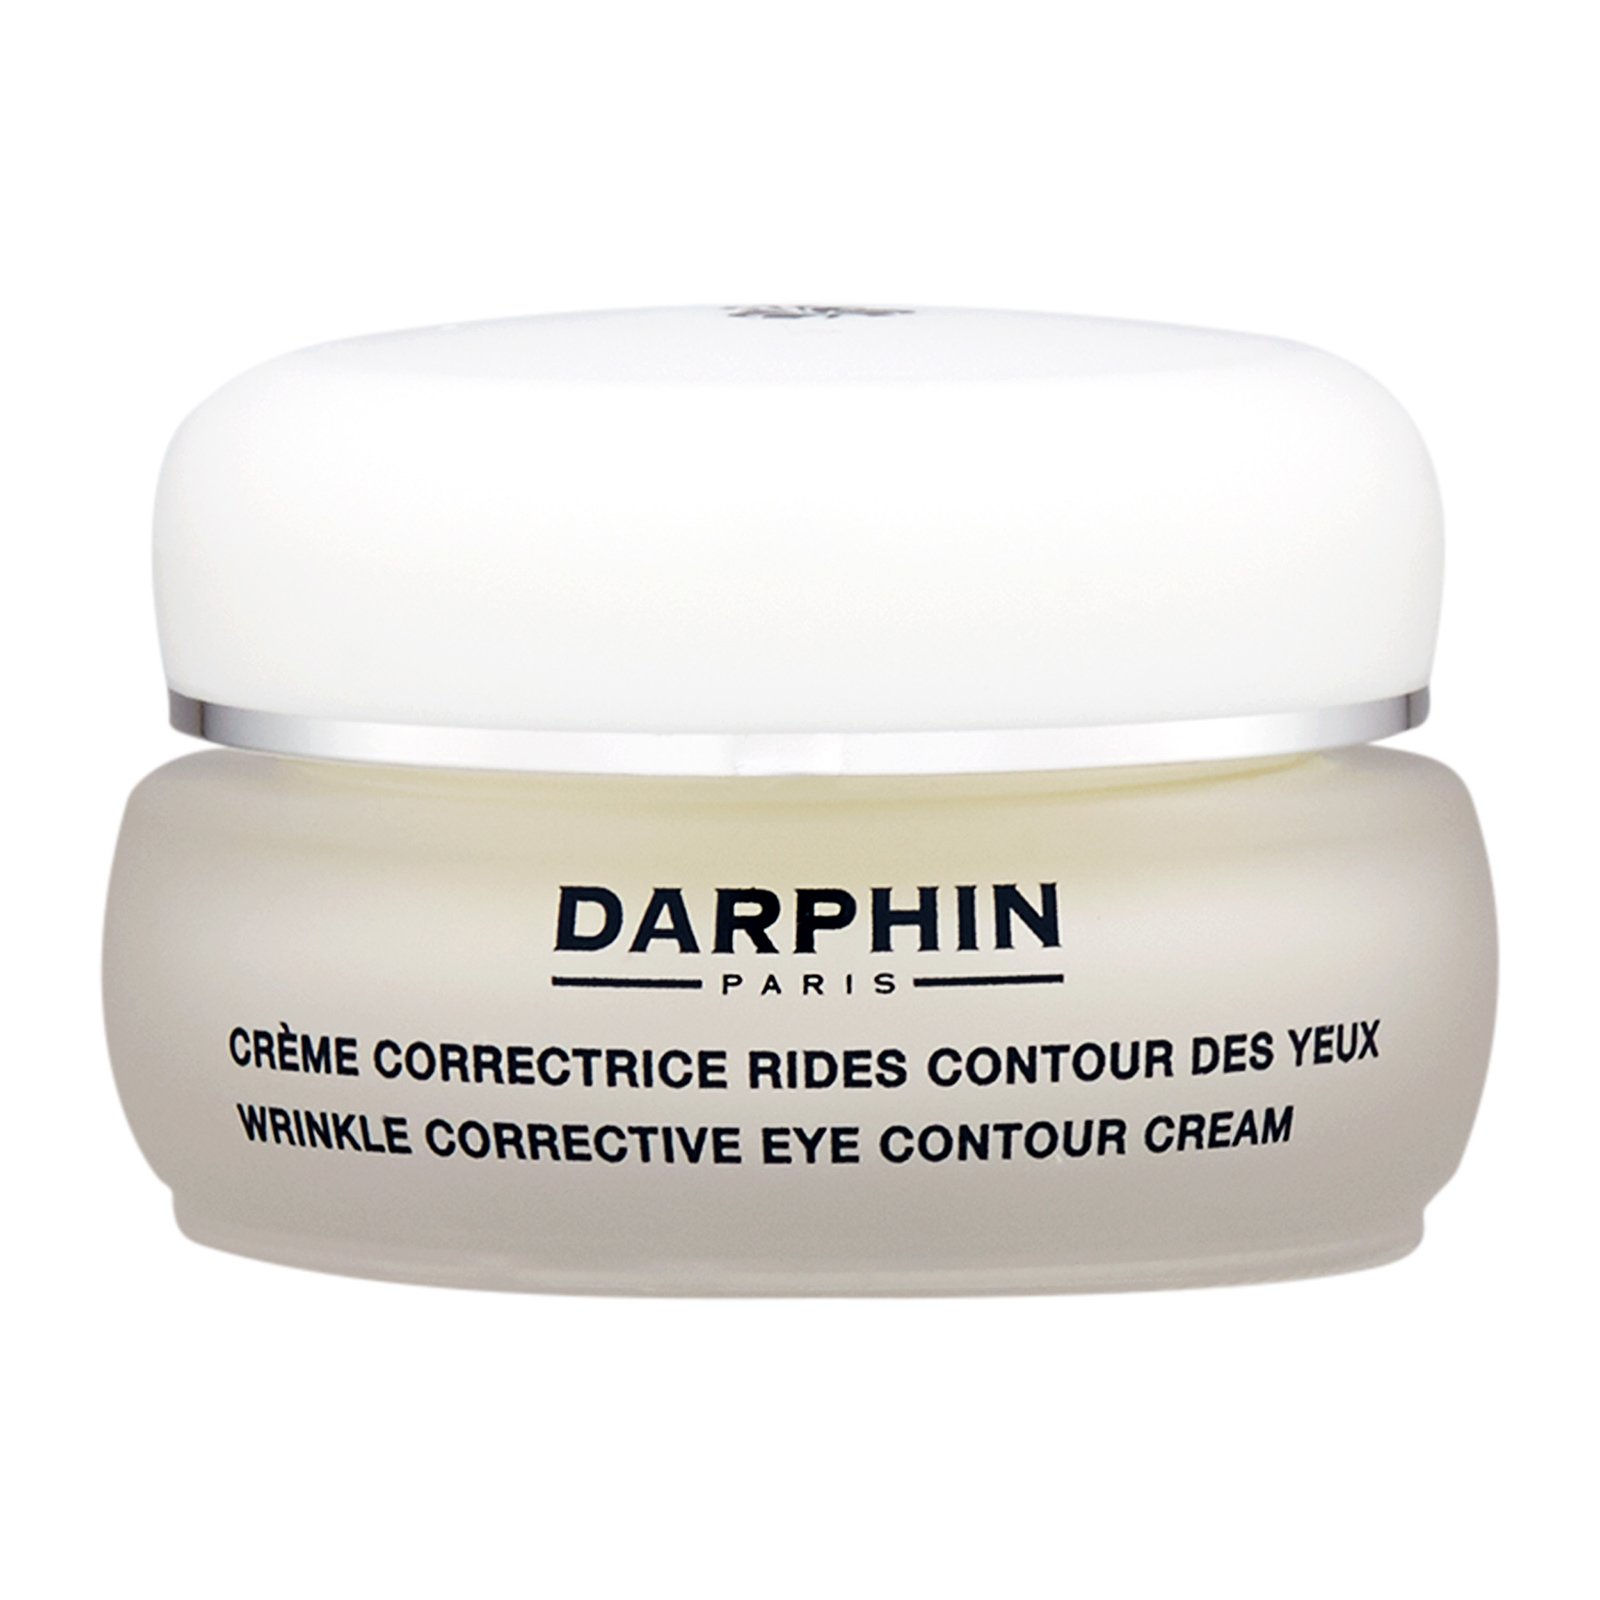 Wrinkle Corrective Eye Contour Cream